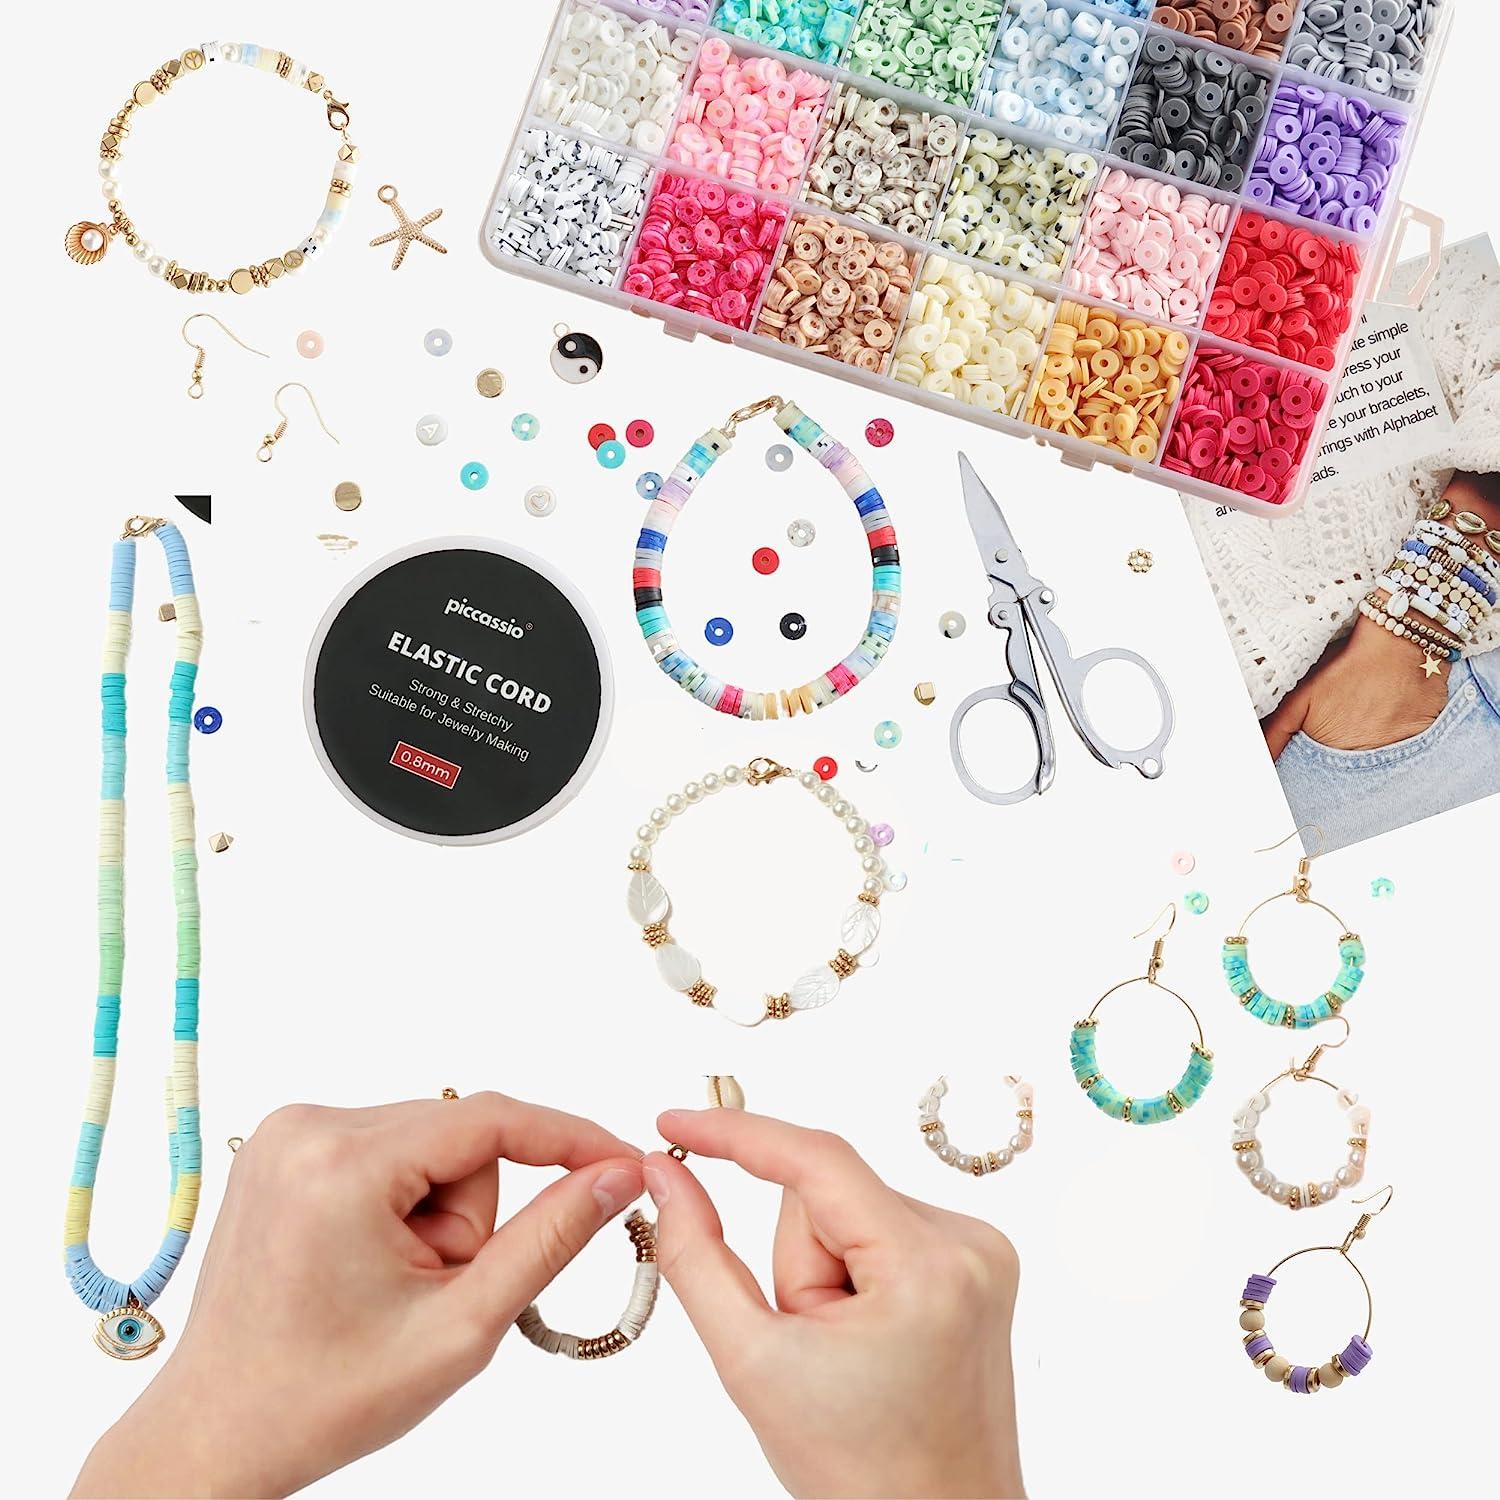 10500+ Pcs Clay Beads for Bracelets Making Kit - Heishi Beads Kit